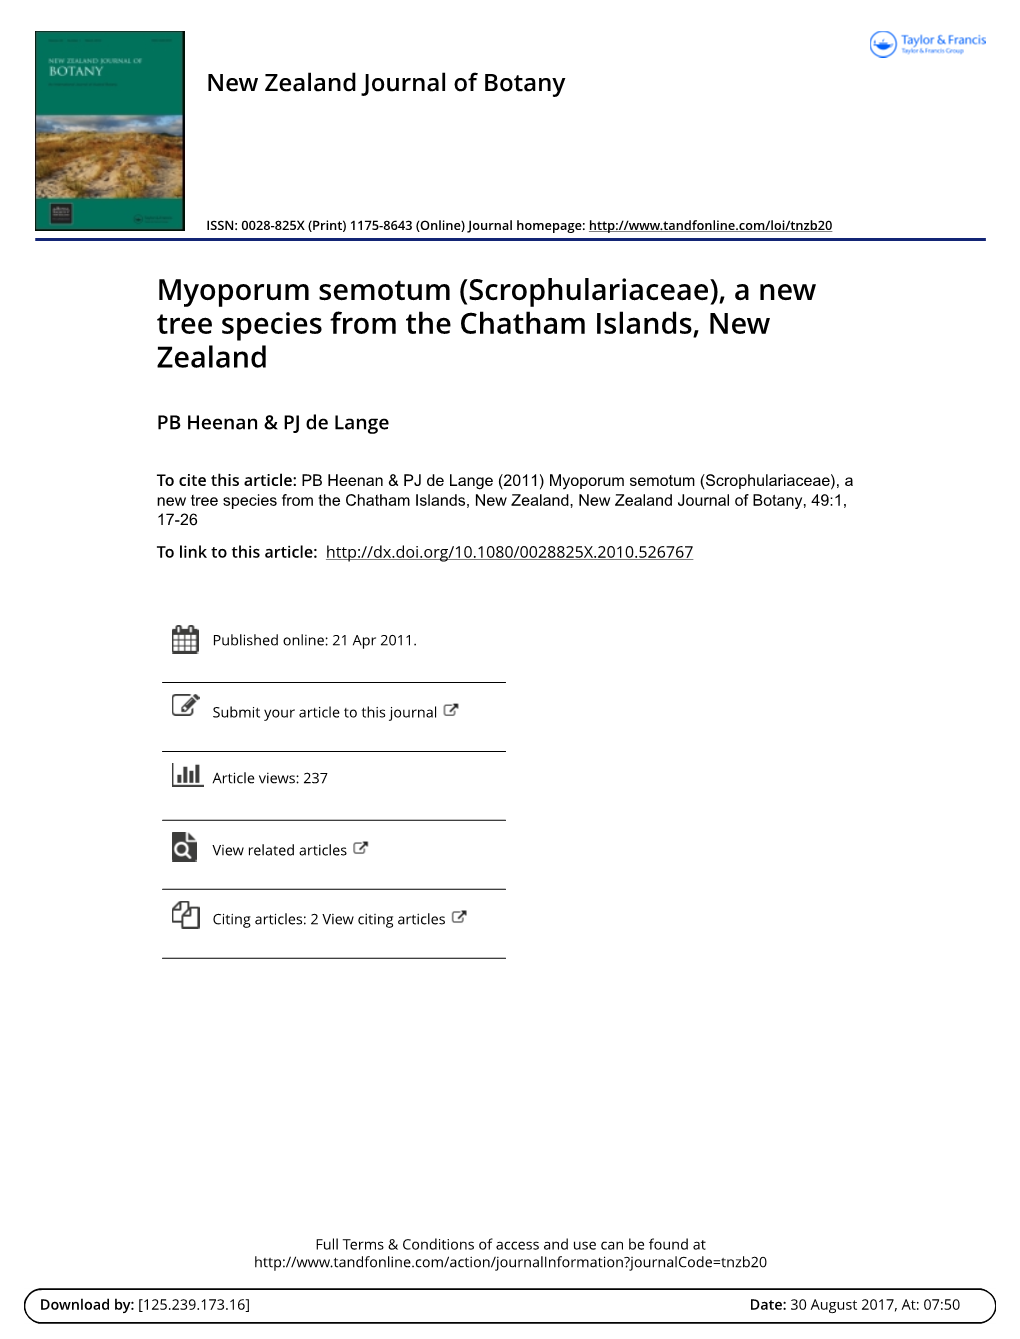 Myoporum Semotum (Scrophulariaceae), a New Tree Species from the Chatham Islands, New Zealand